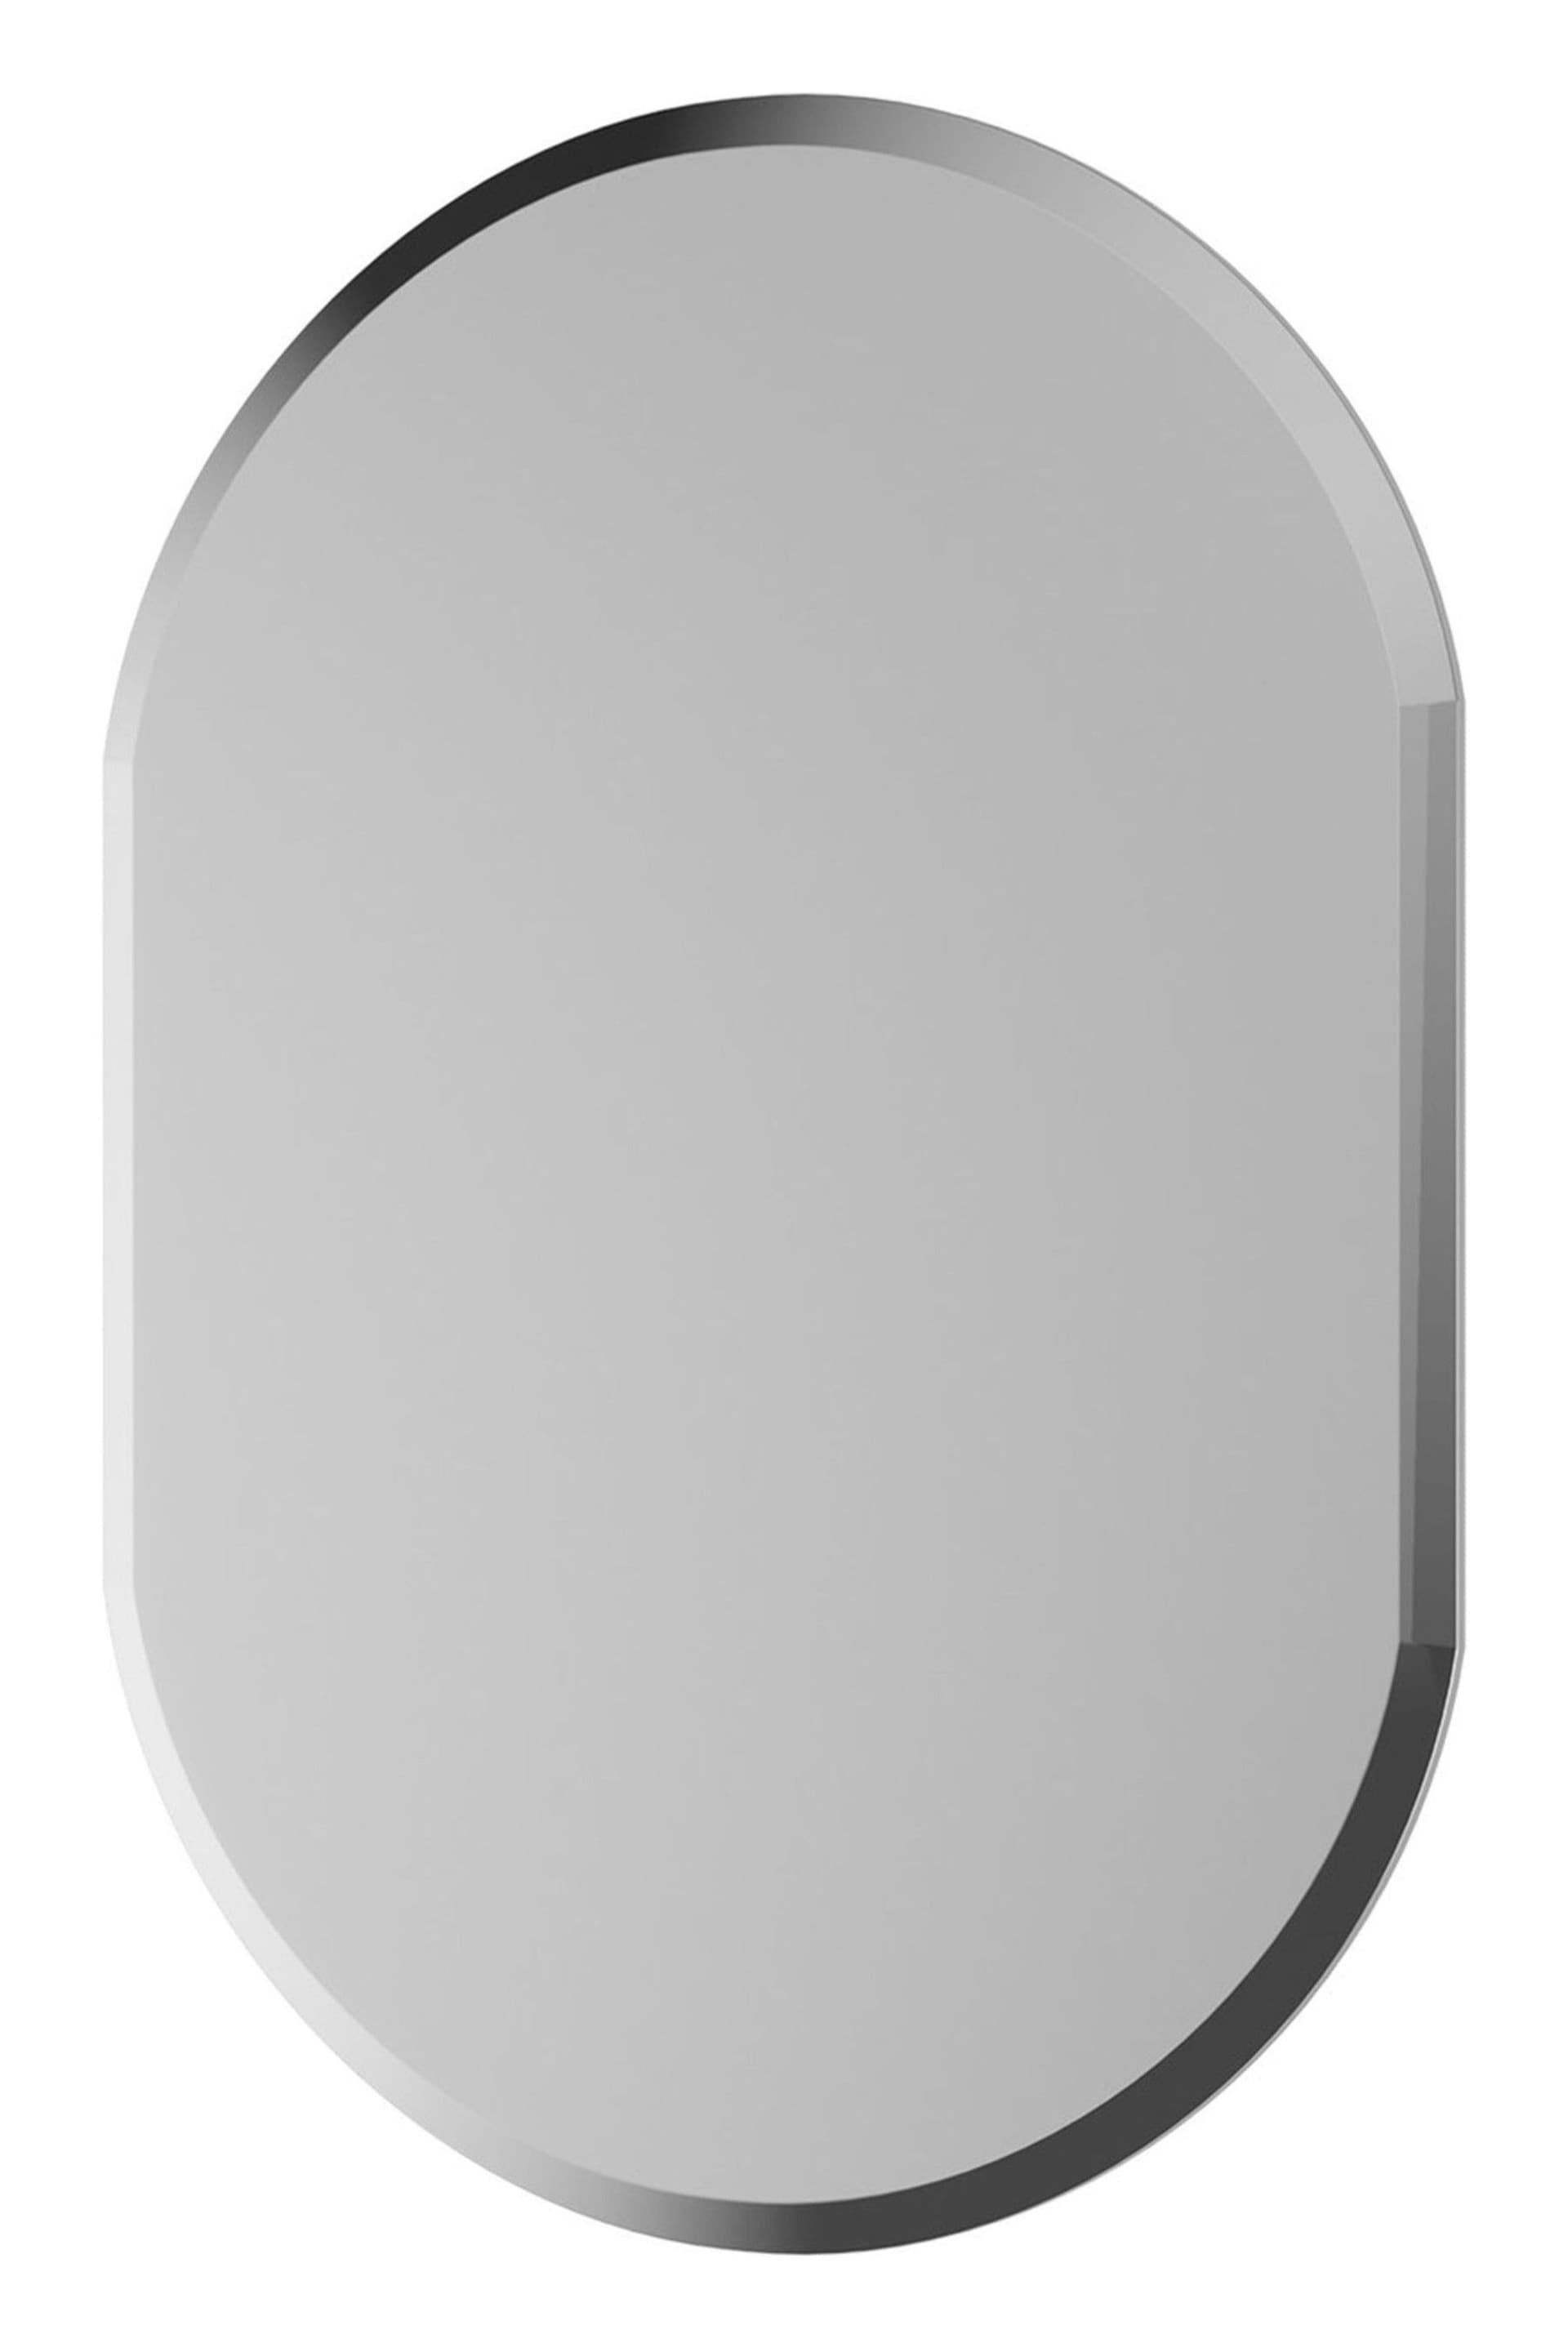 Showerdrape Lincoln Small Oval Bathroom Mirror - Image 2 of 4